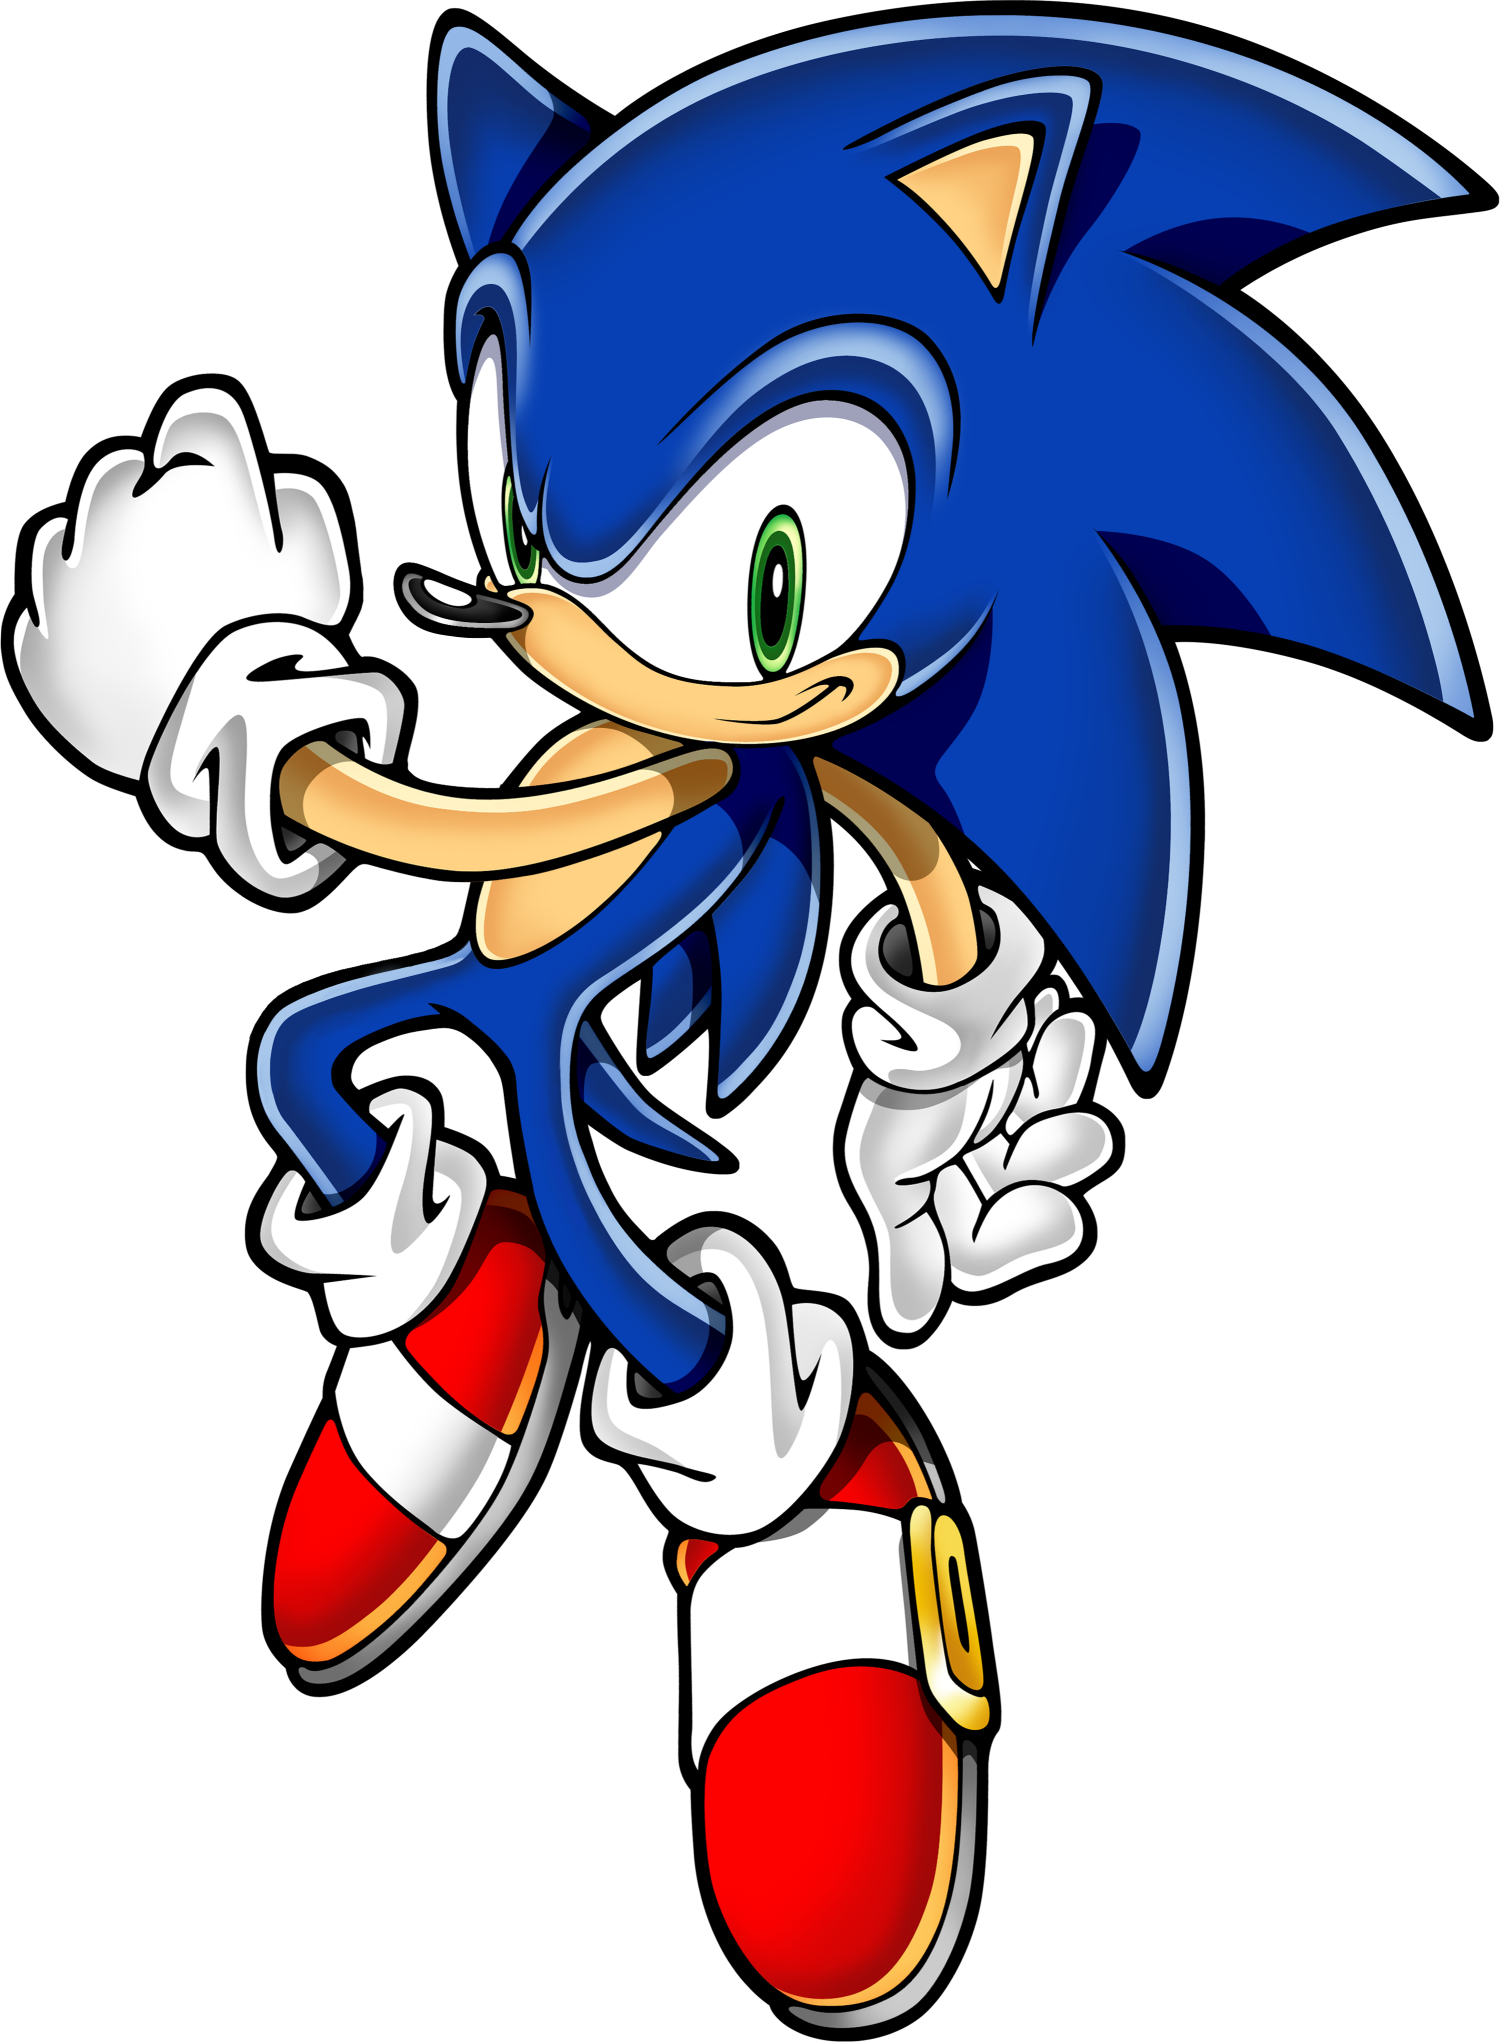 Sonic Art Assets DVD - Sonic The Hedgehog - 15.png